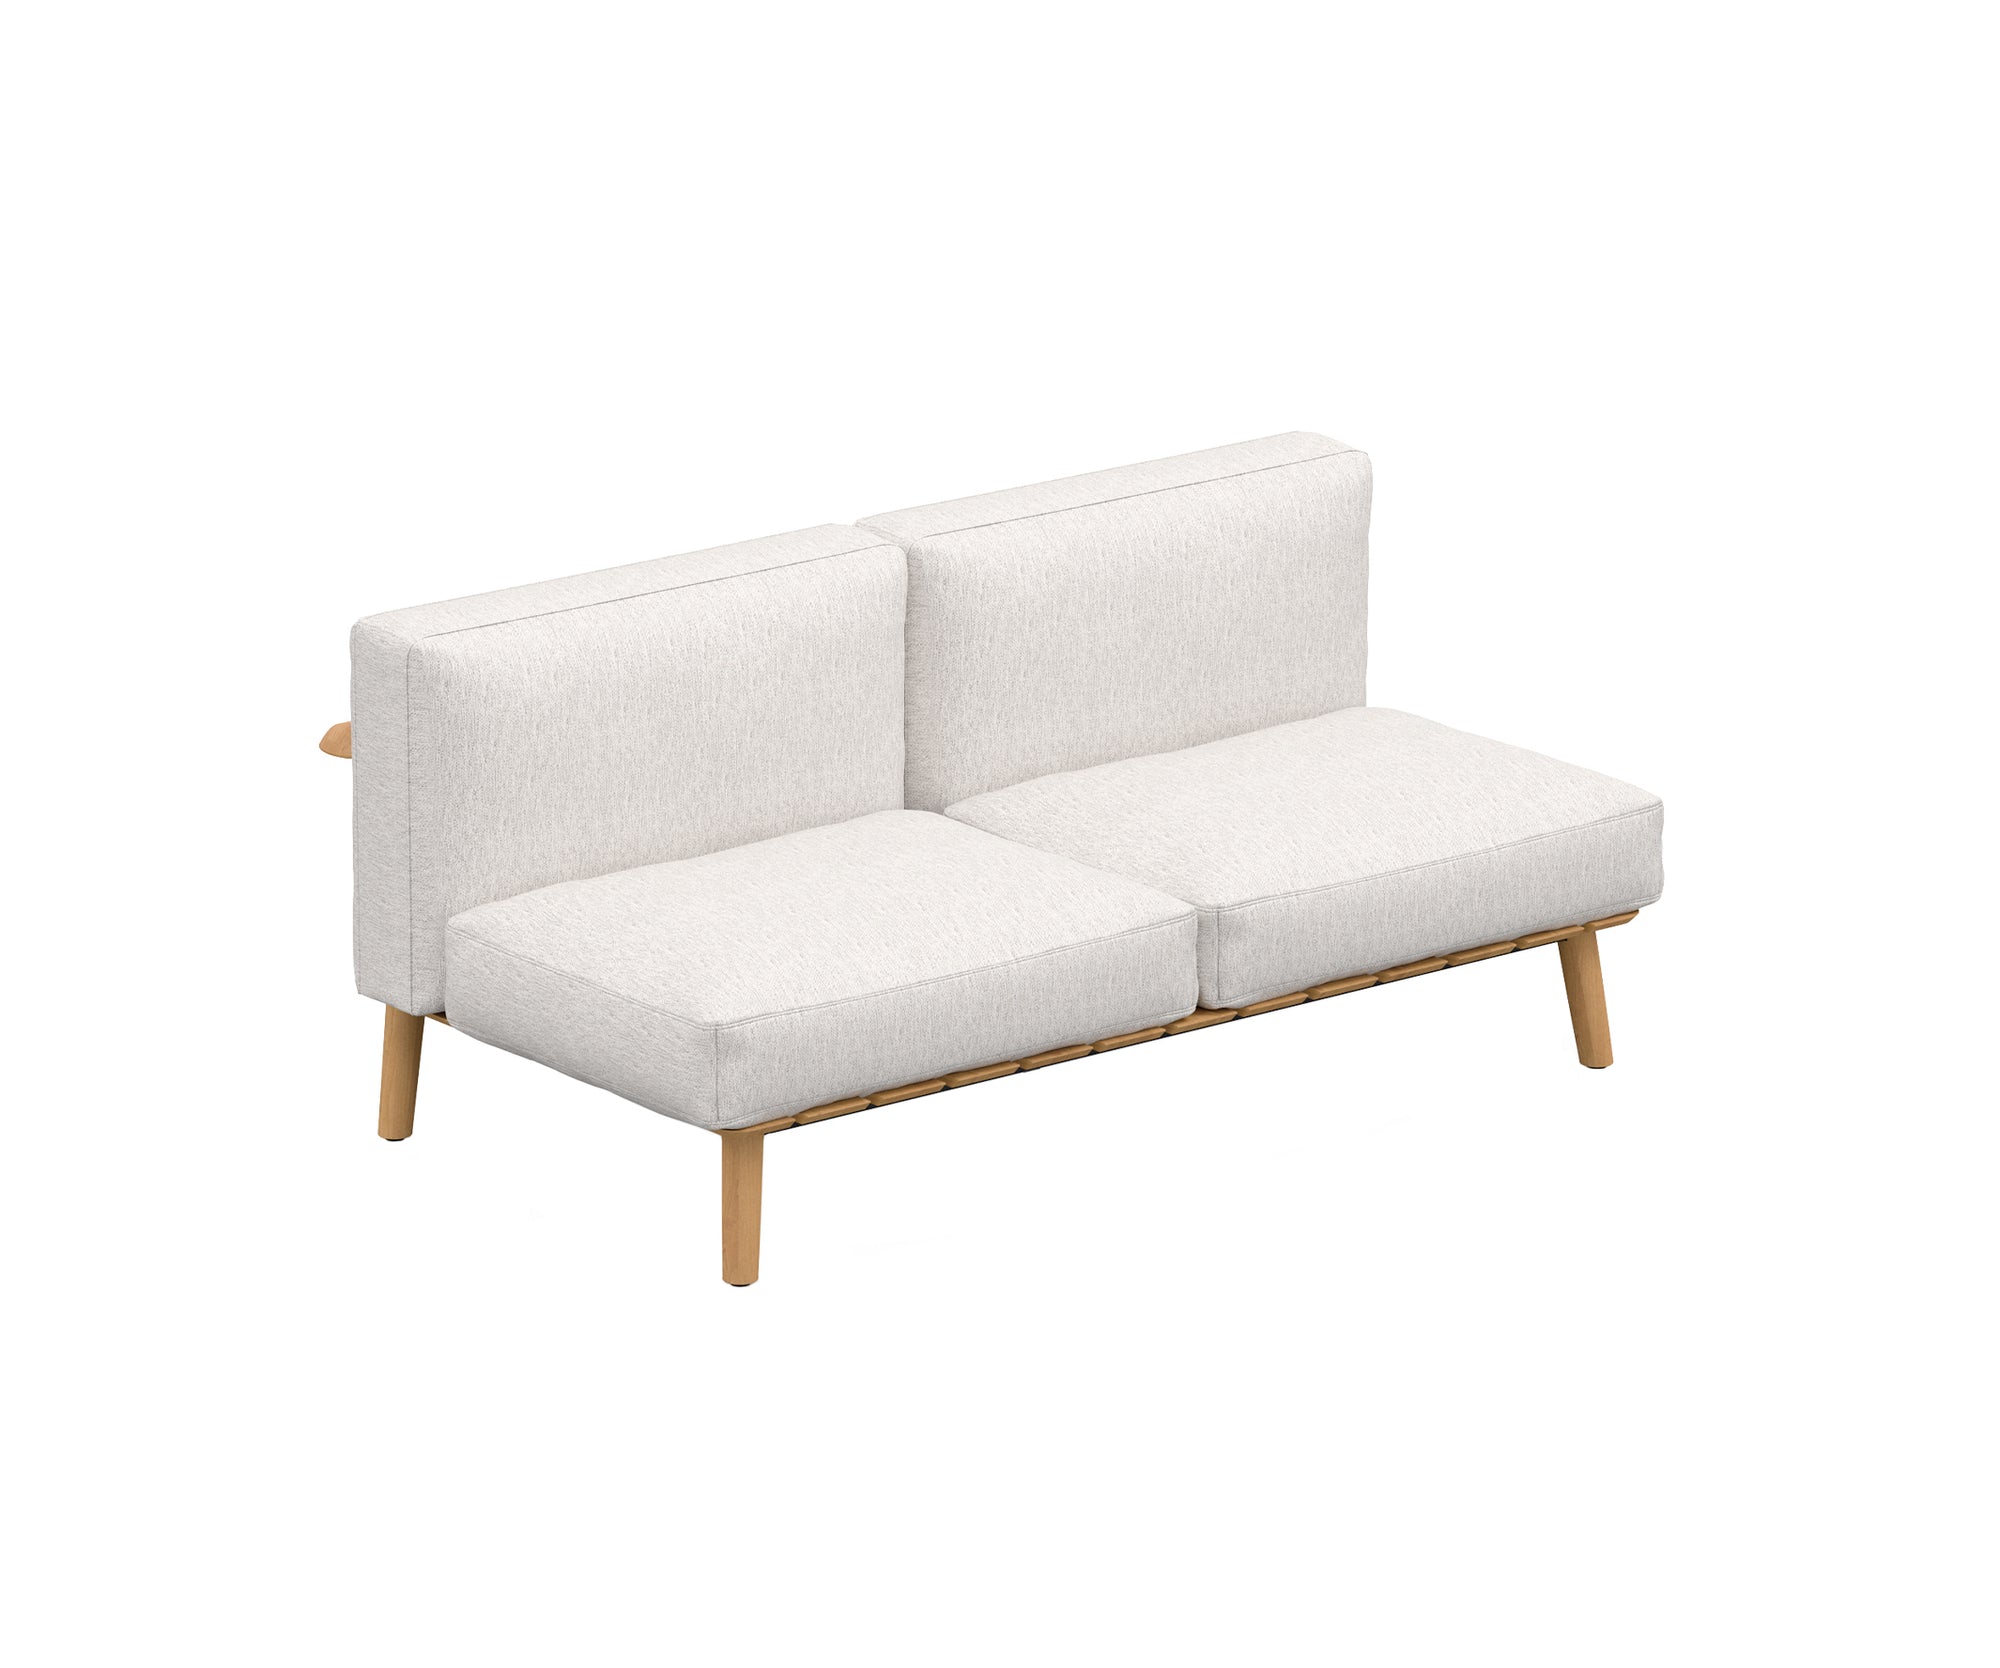 Mambo 2 Seater Sofa | Royal Botania